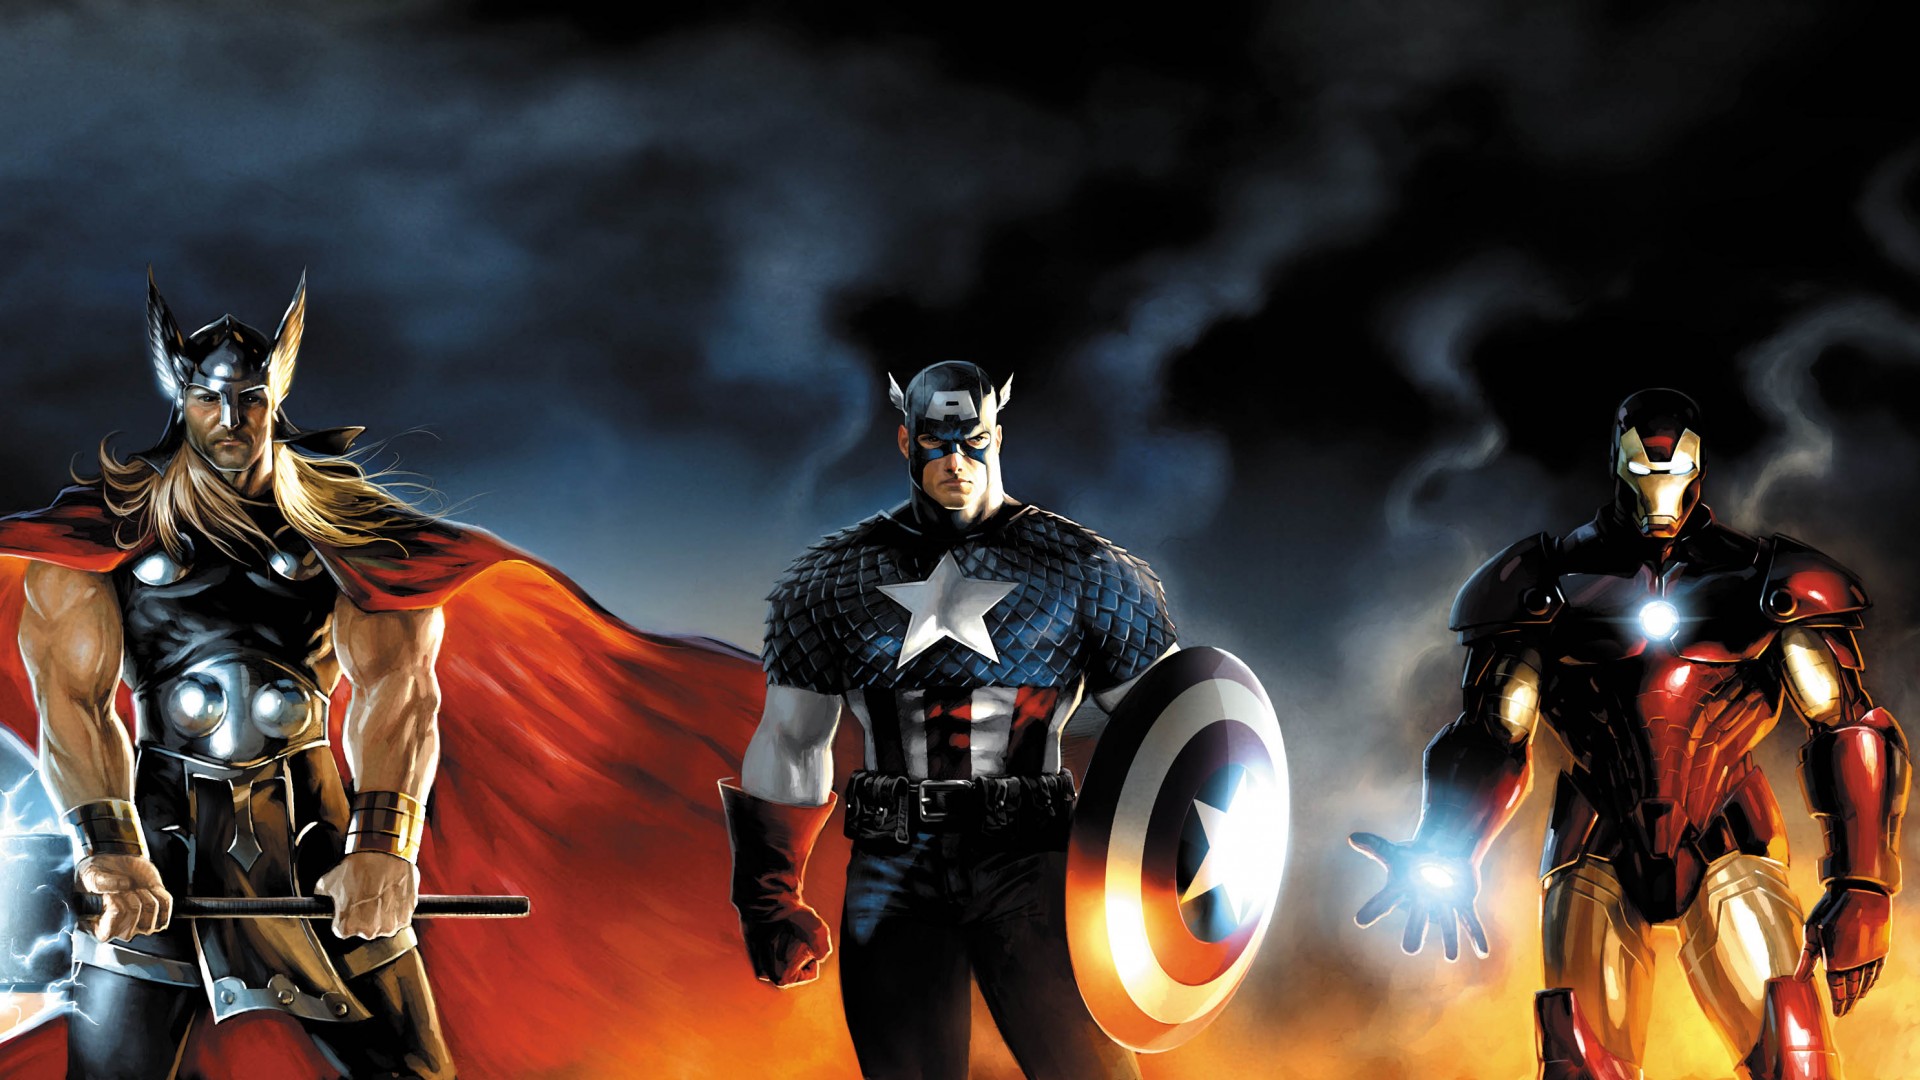 3d wallpaper of avengers,superhero,fictional character,cg artwork,games,action film